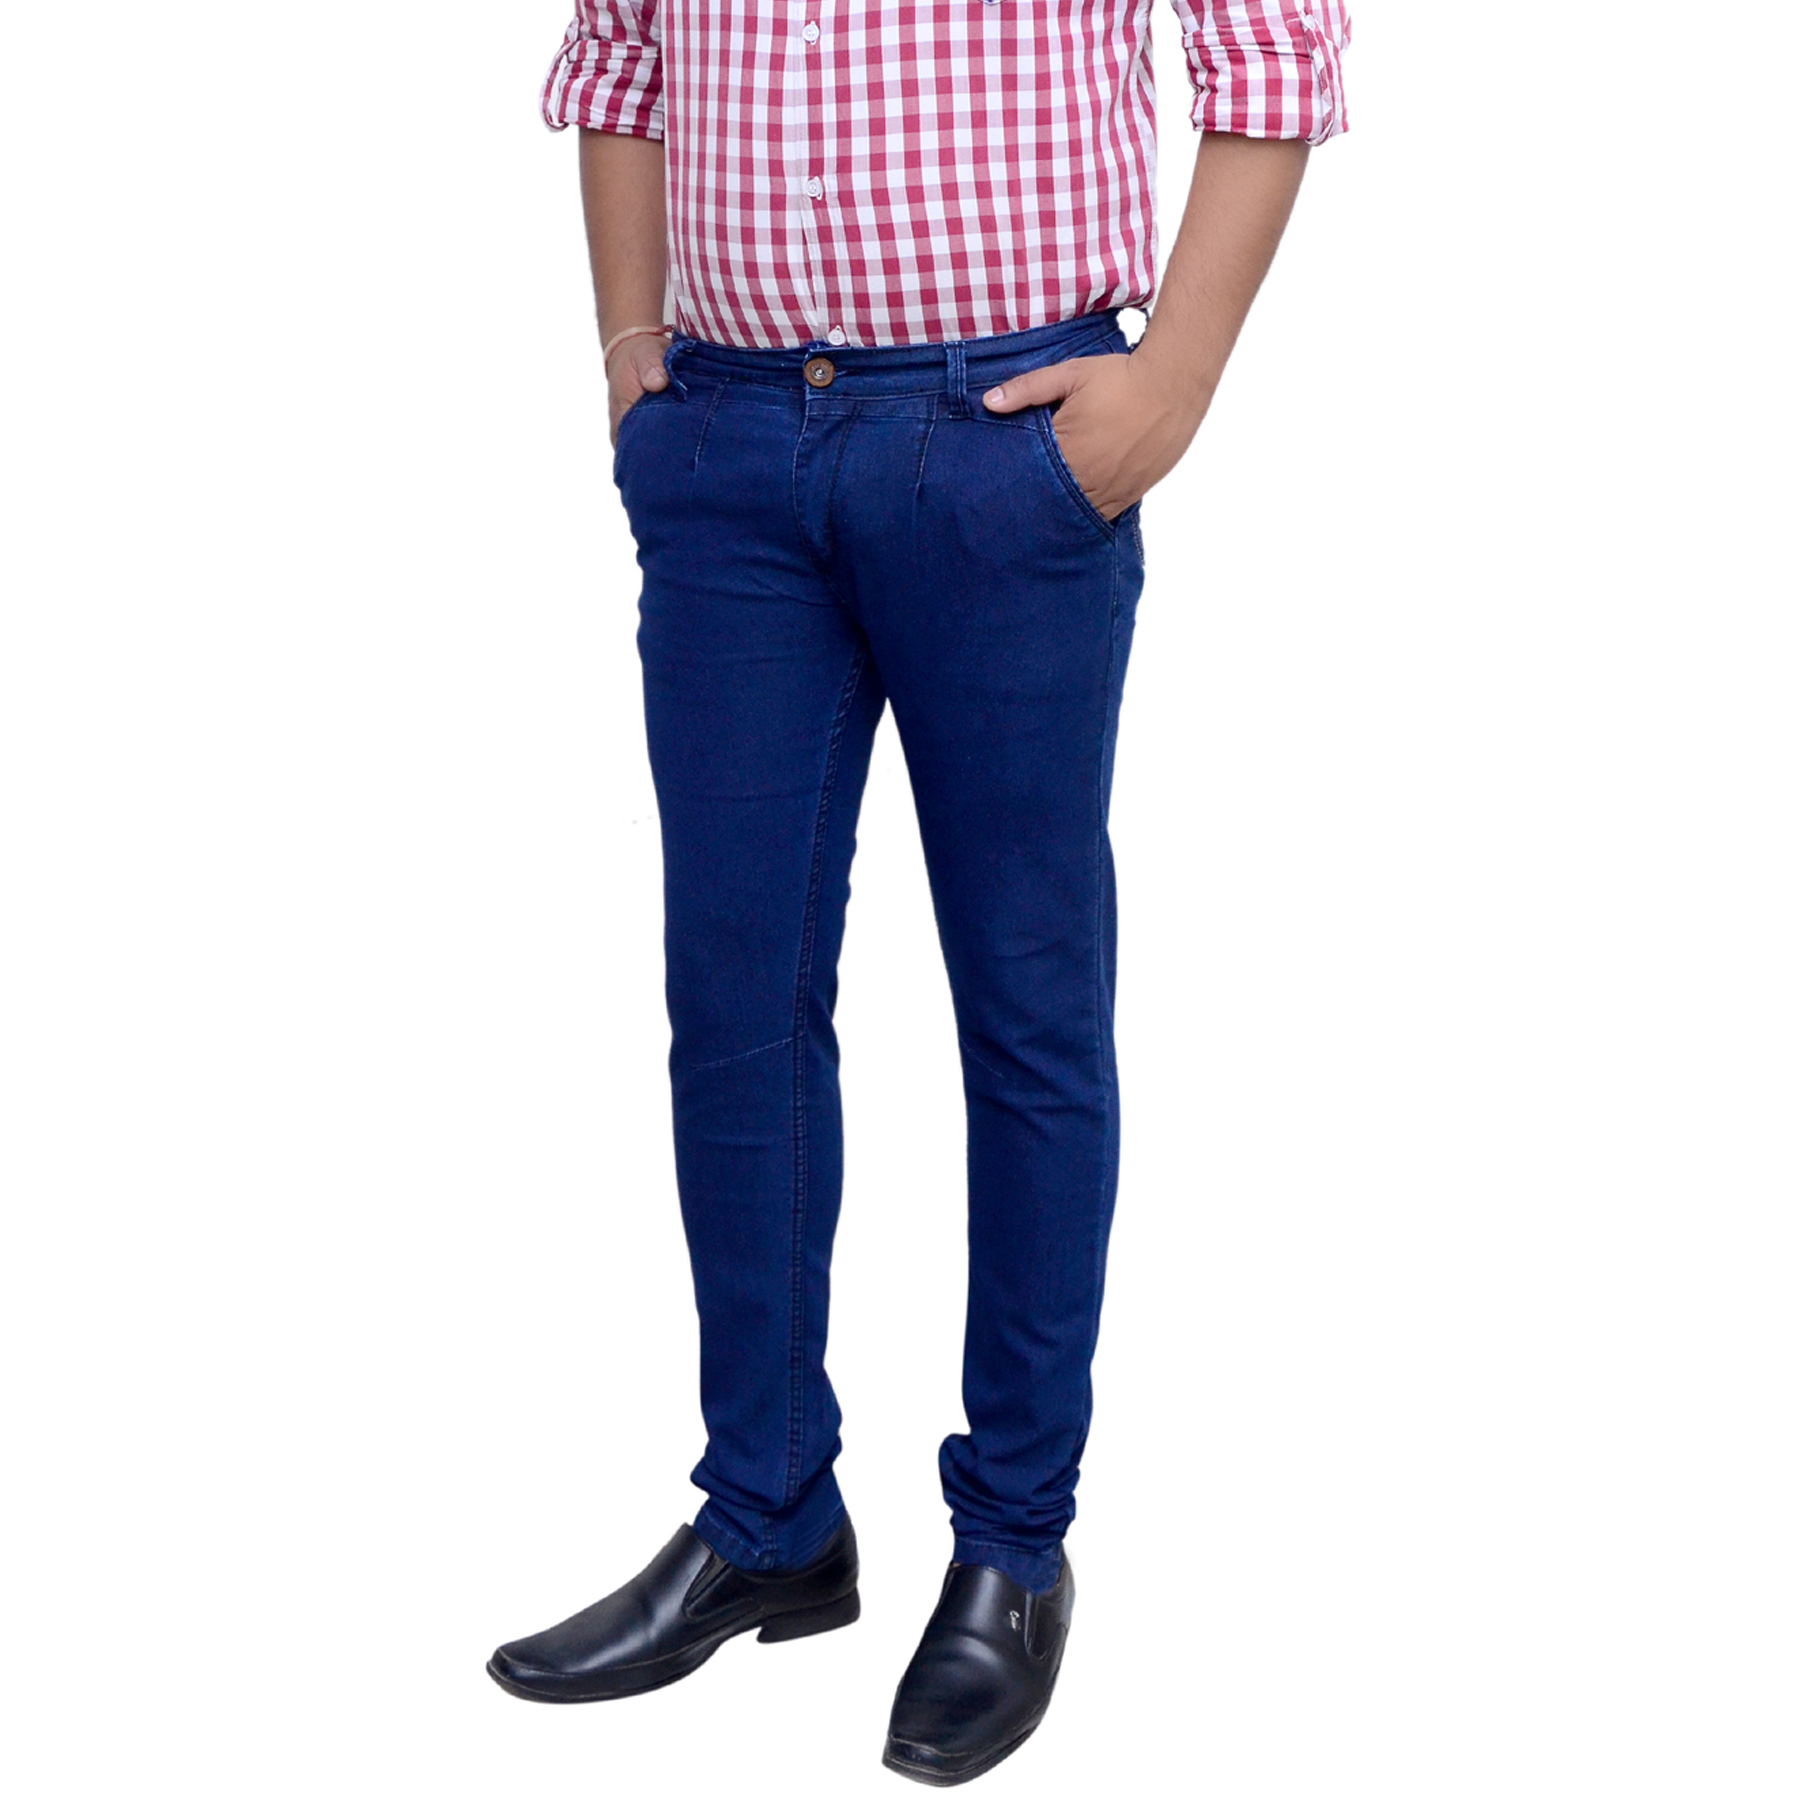 Buy Men's Regular Fit Blue Jeans Online @ ₹599 from ShopClues